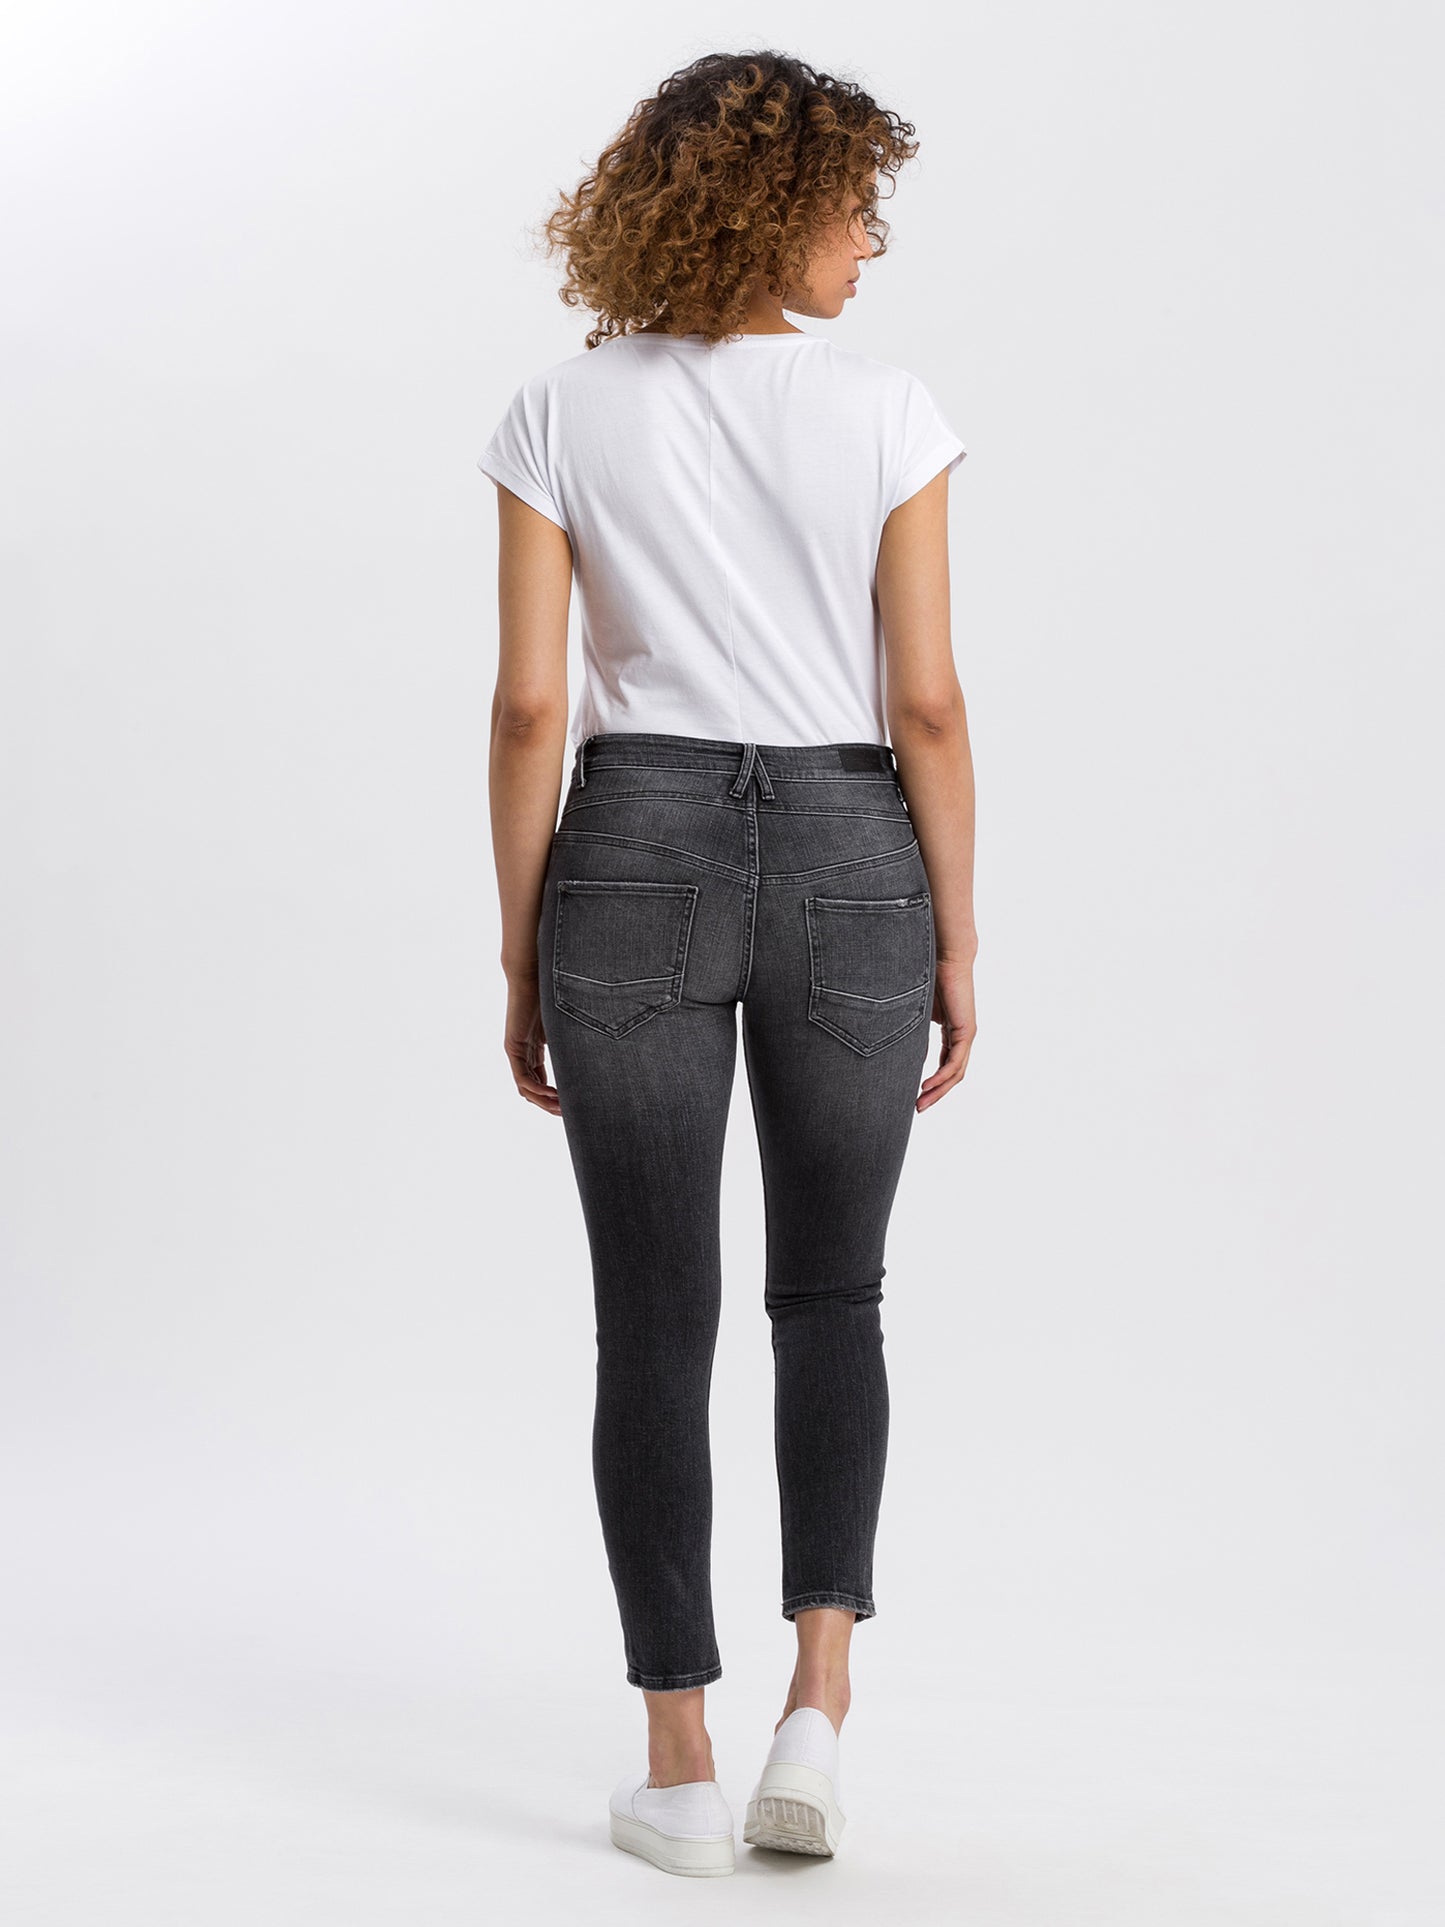 Tanya women's jeans slim fit high waist black